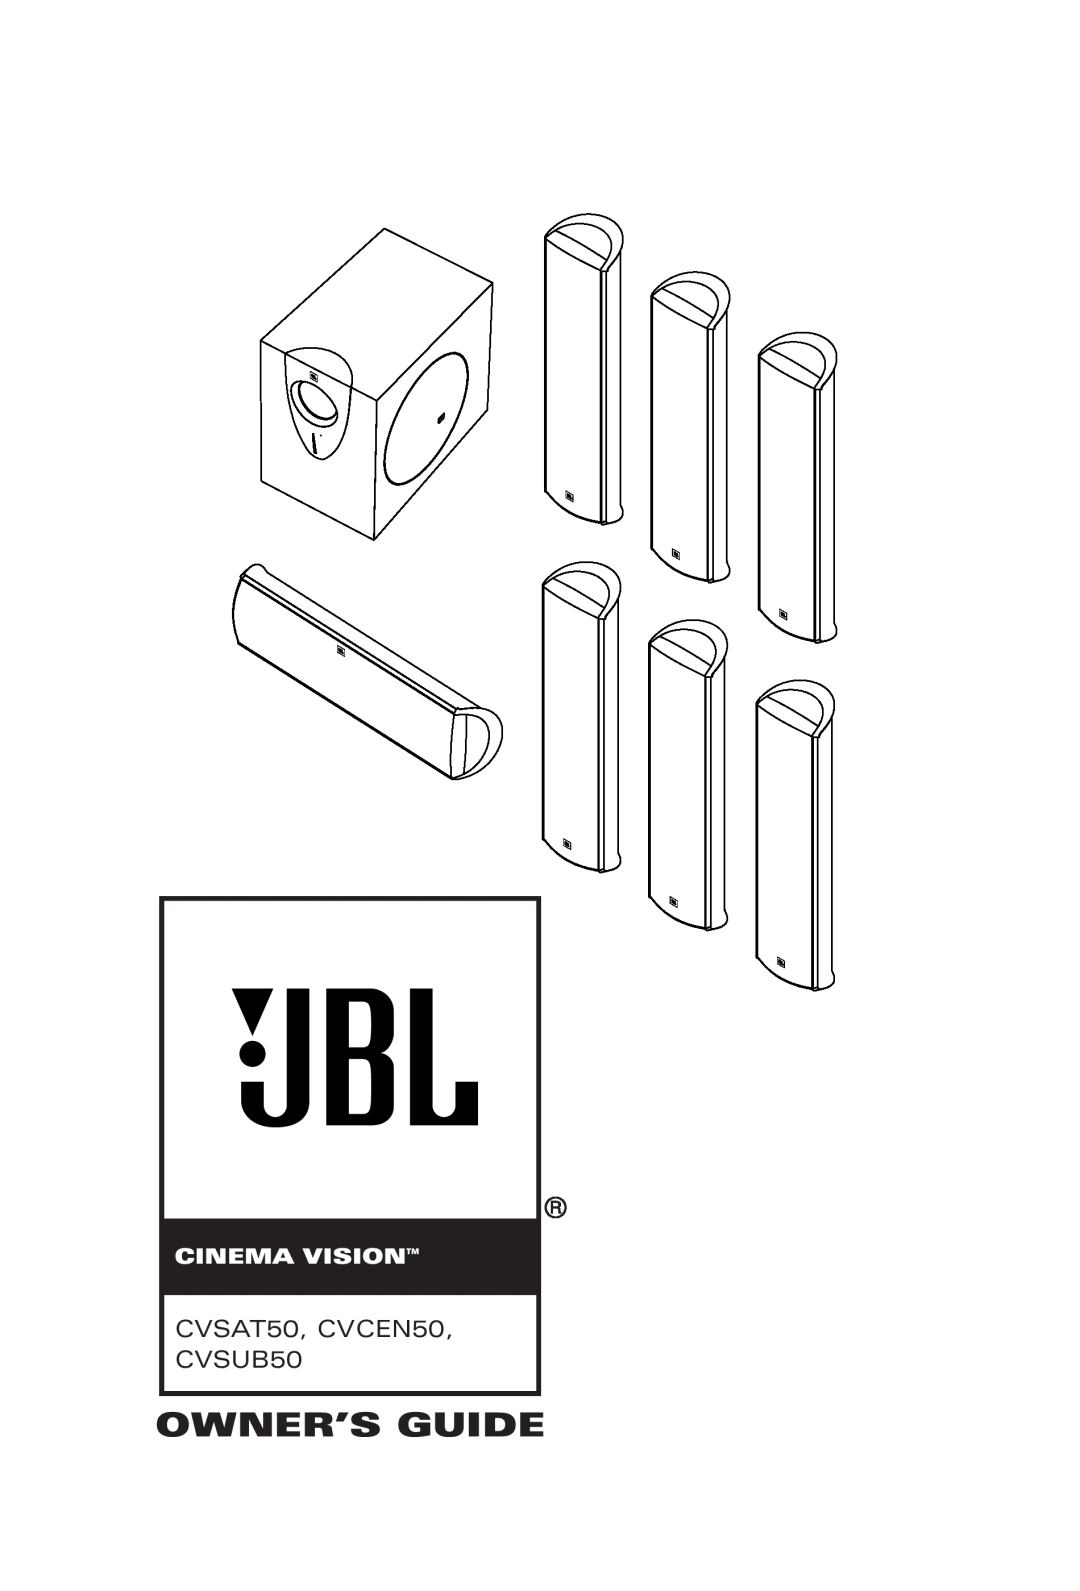 JBL manual Owner’S Guide, CVSAT50, CVCEN50, CVSUB50, Cinema Vision 